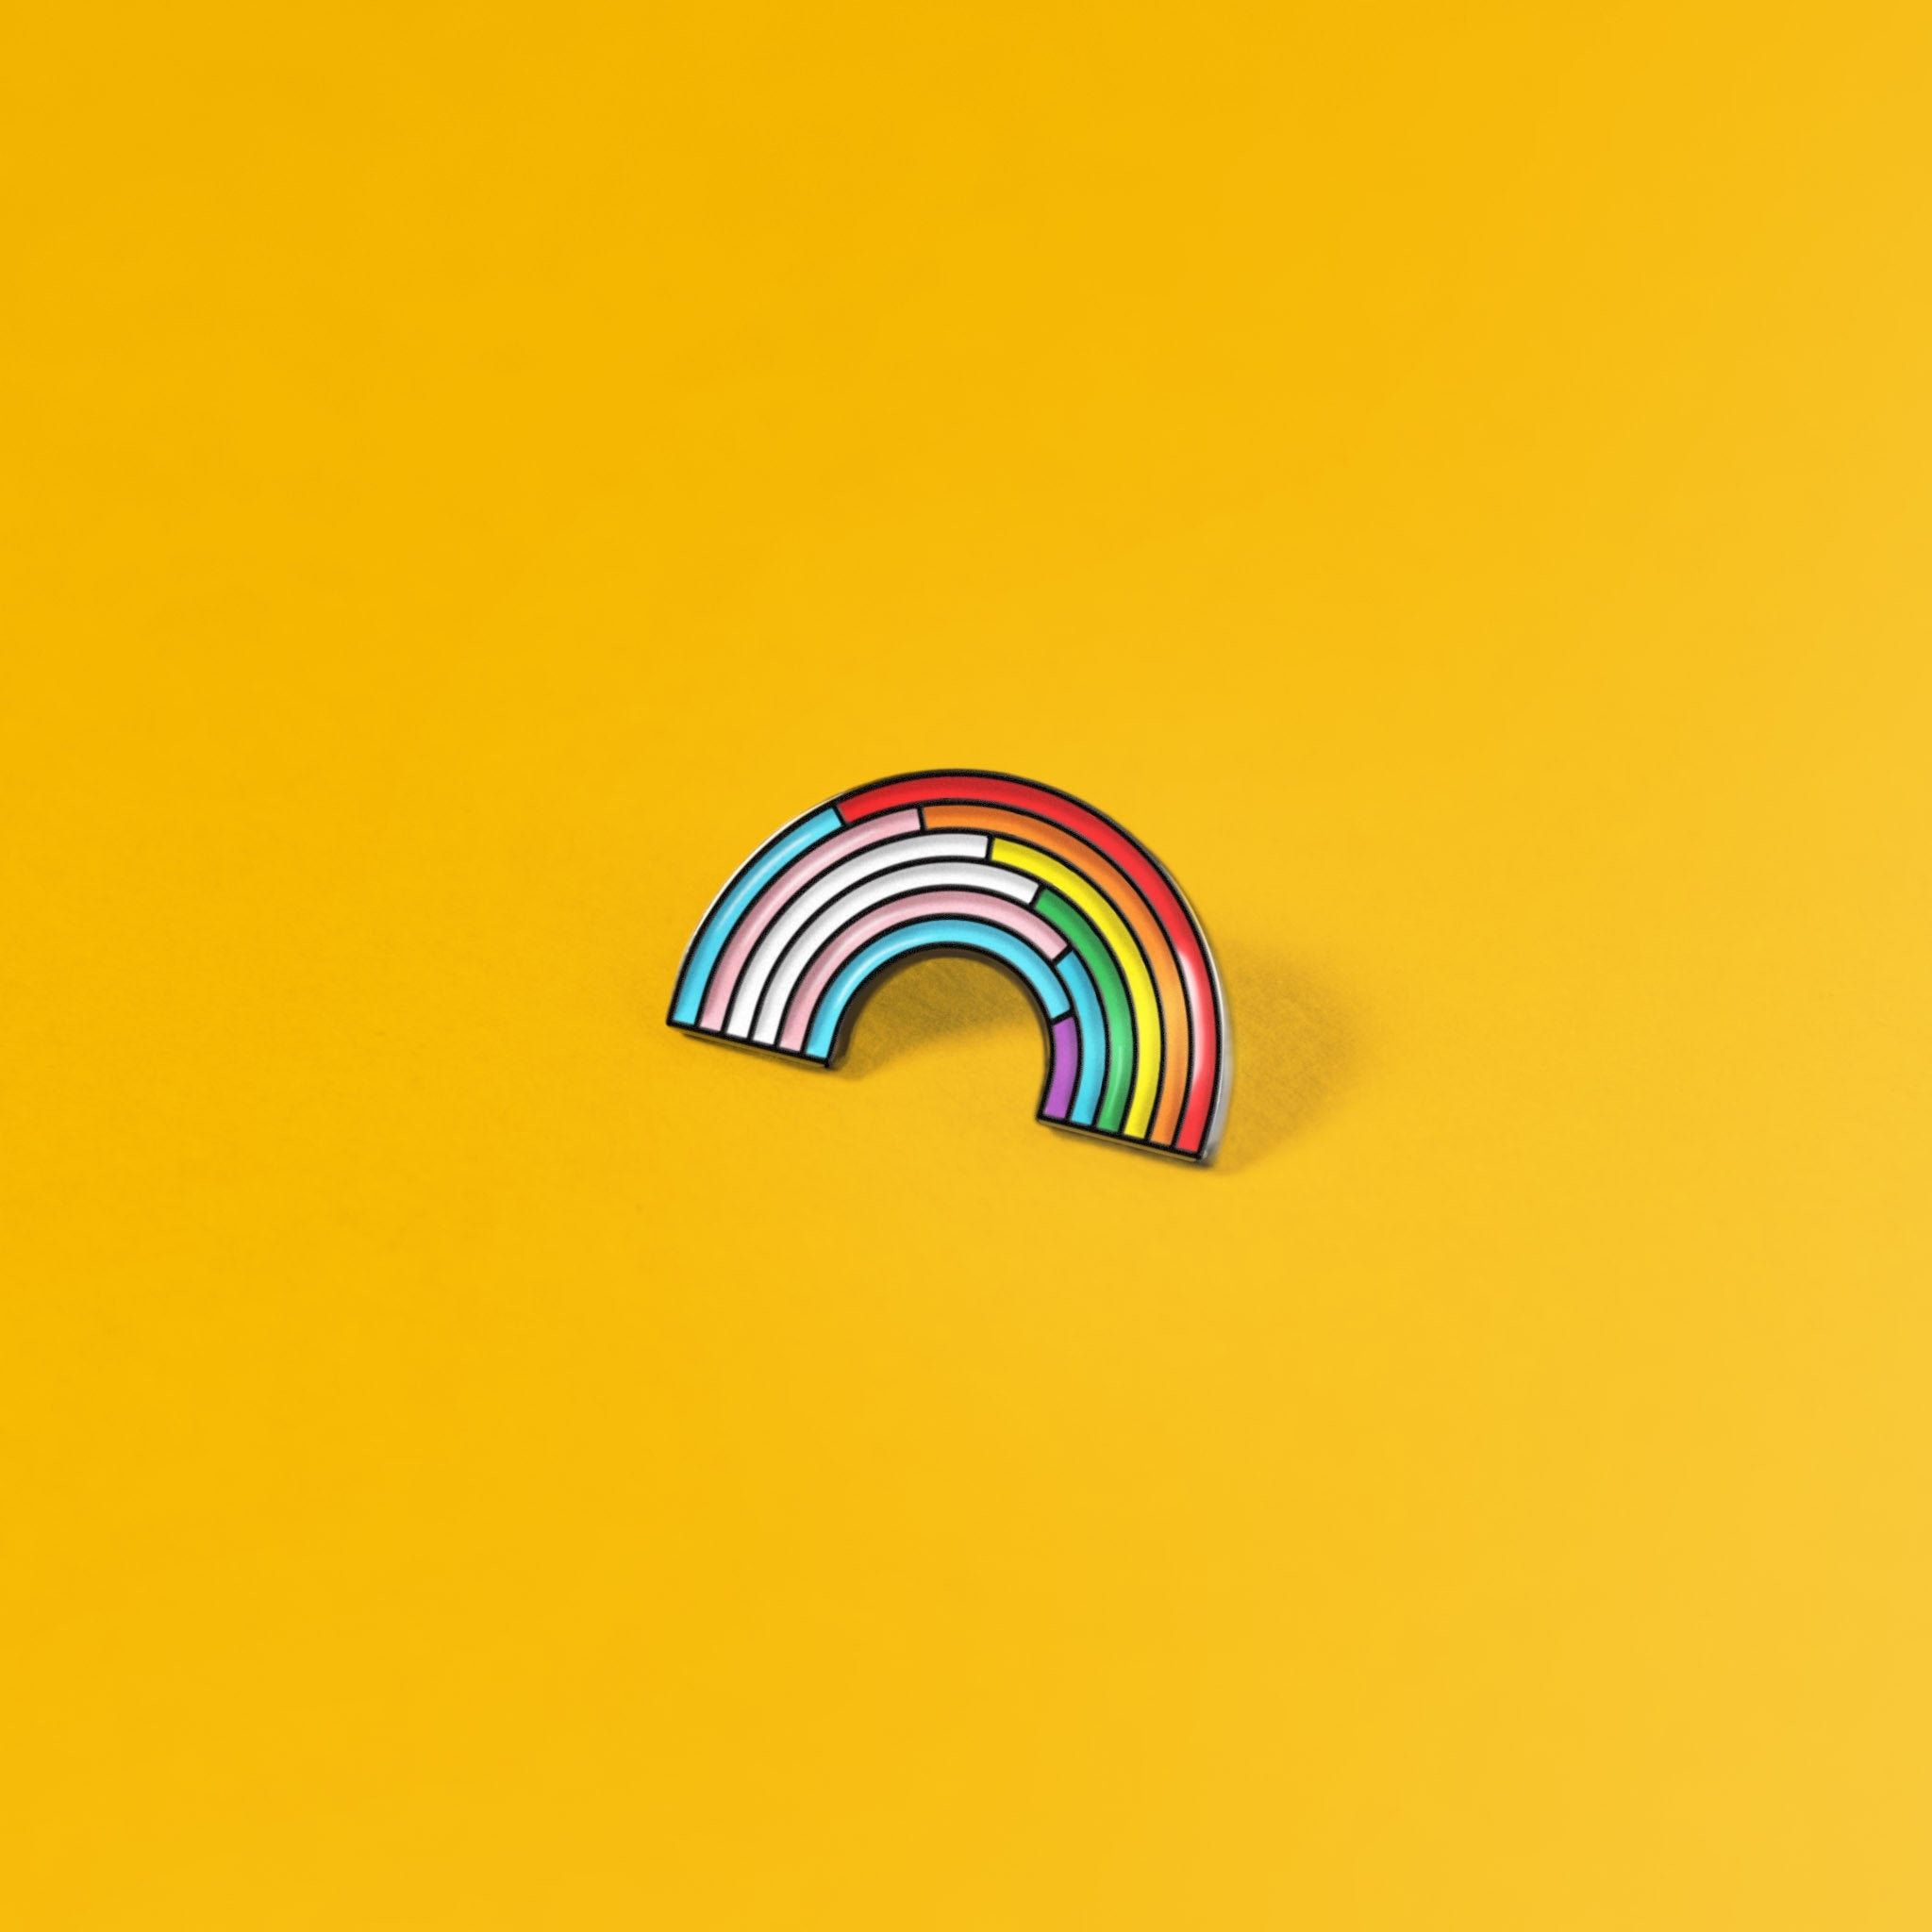 Trans Rainbow Pin Enby Badge Subtle Pride Accessory LGBT Gay